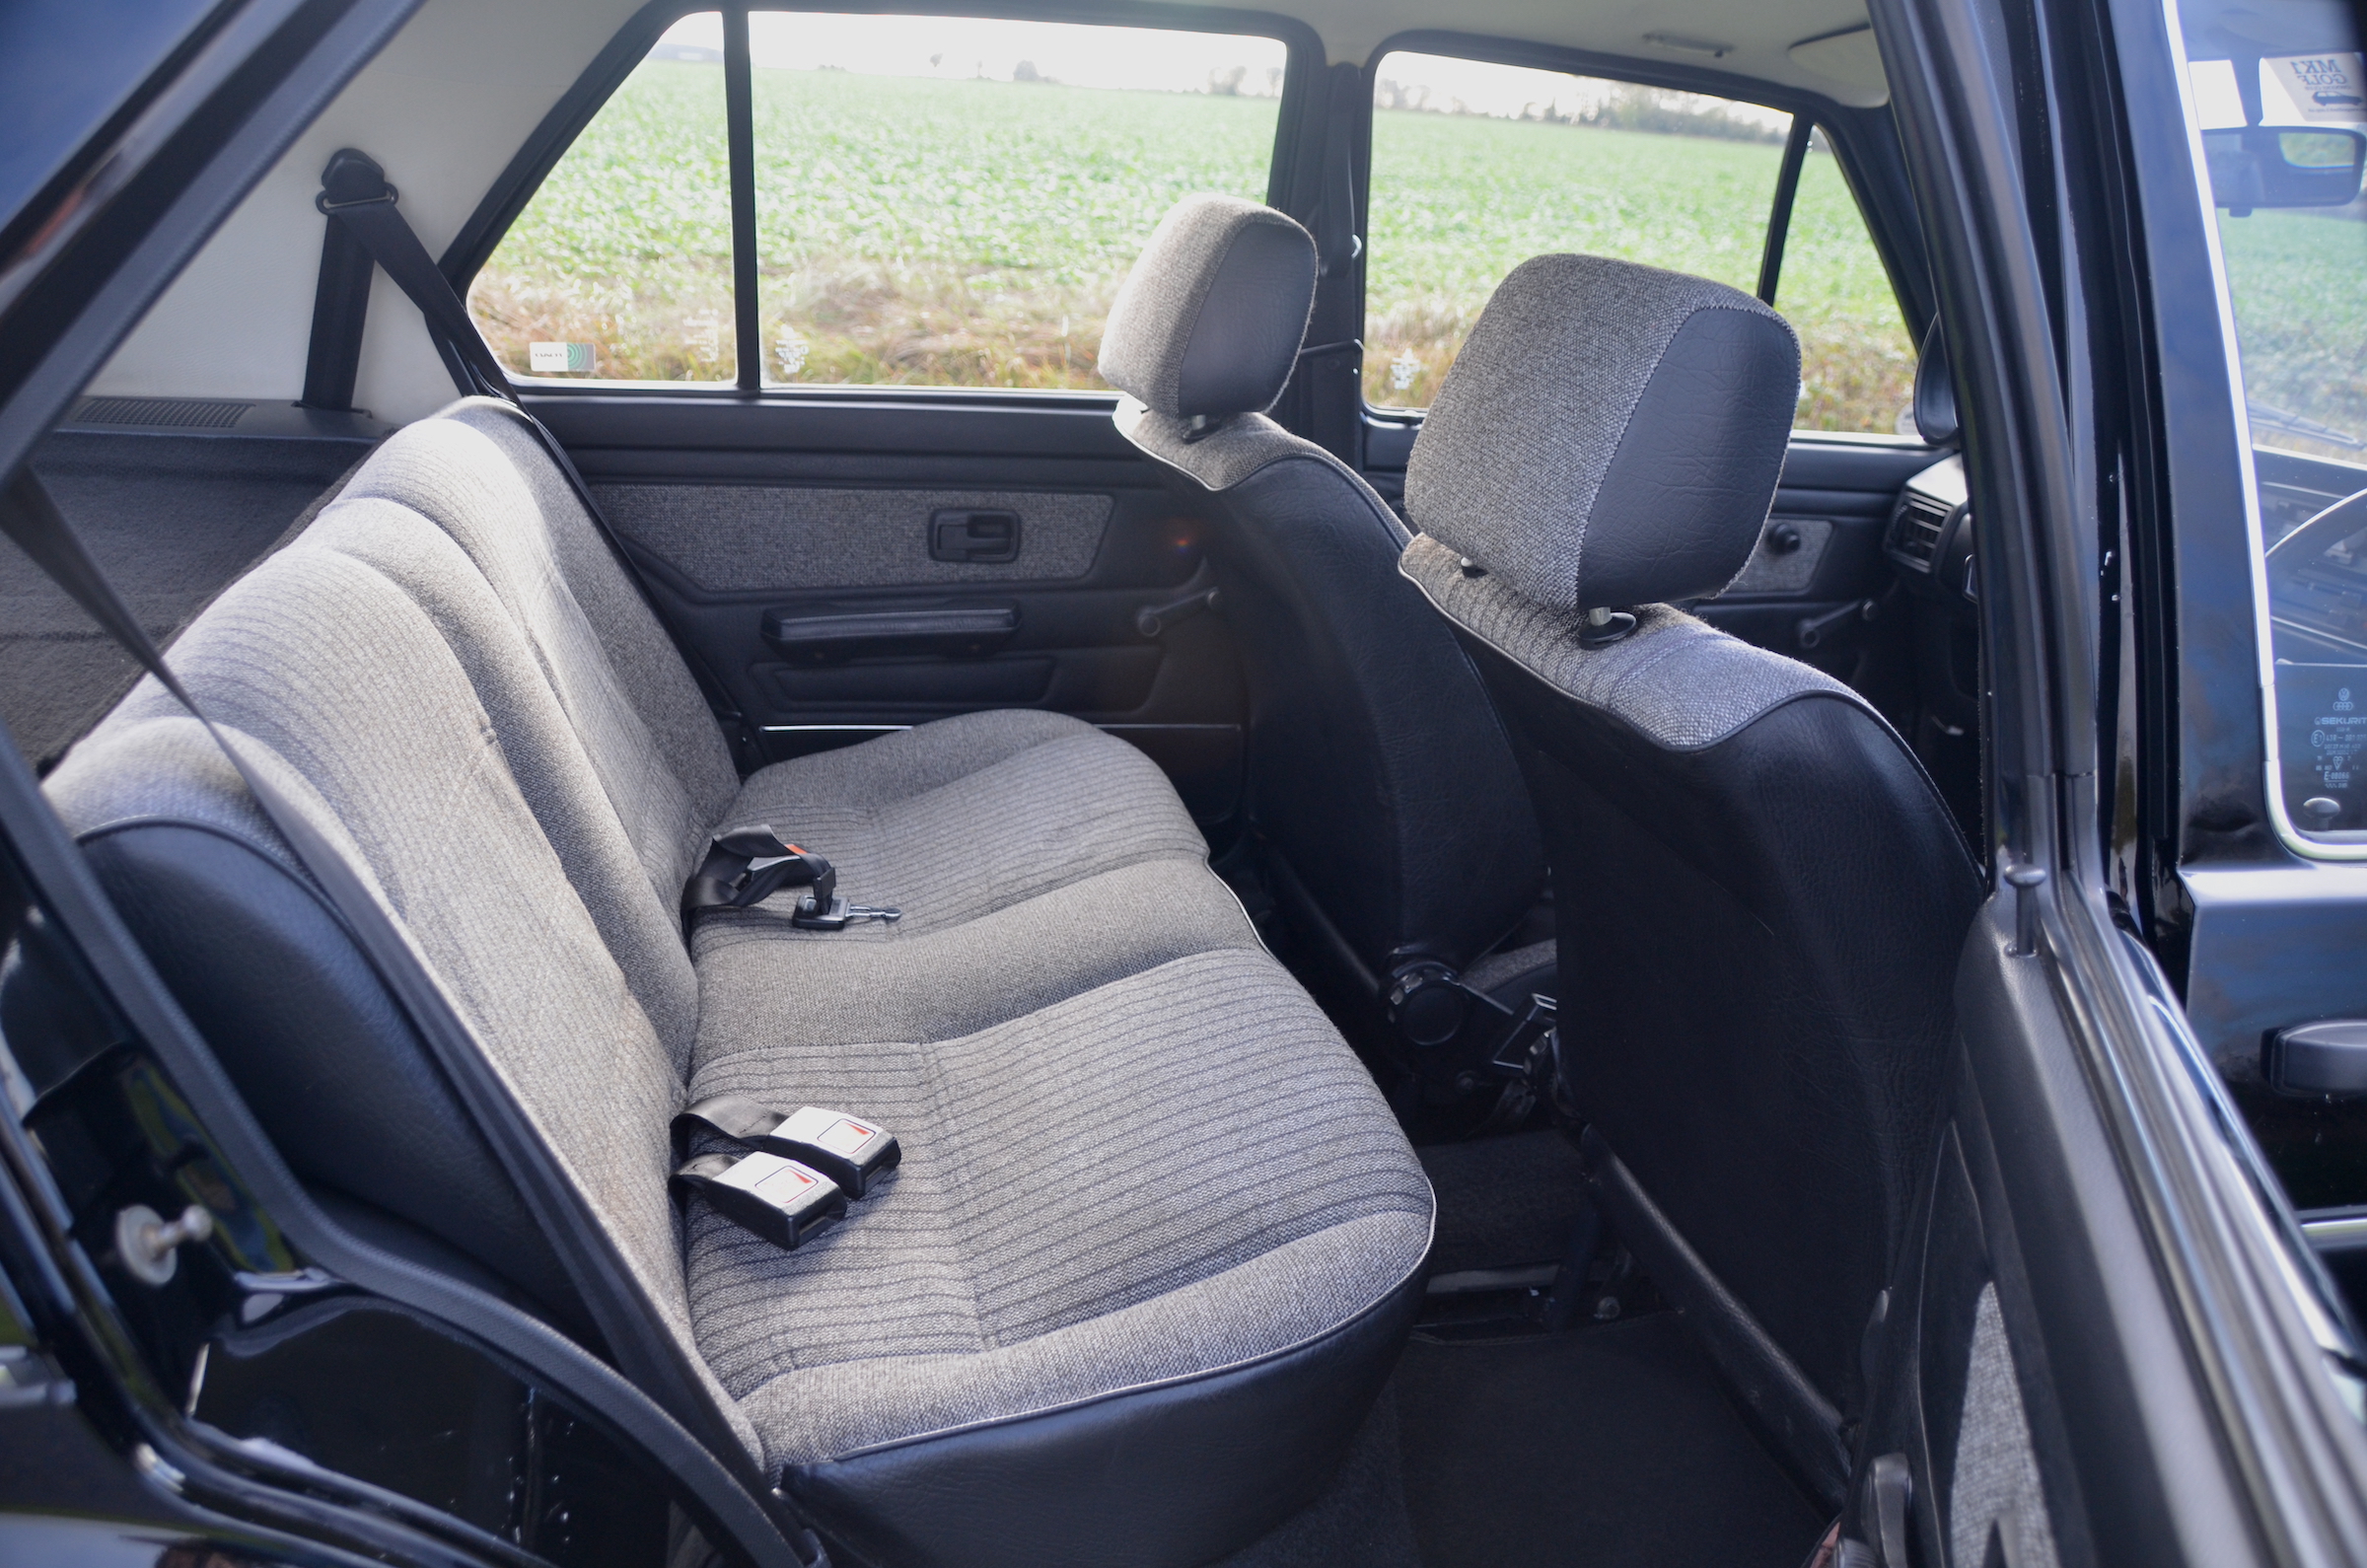 Volkswagen Golf Mk1 rear seats